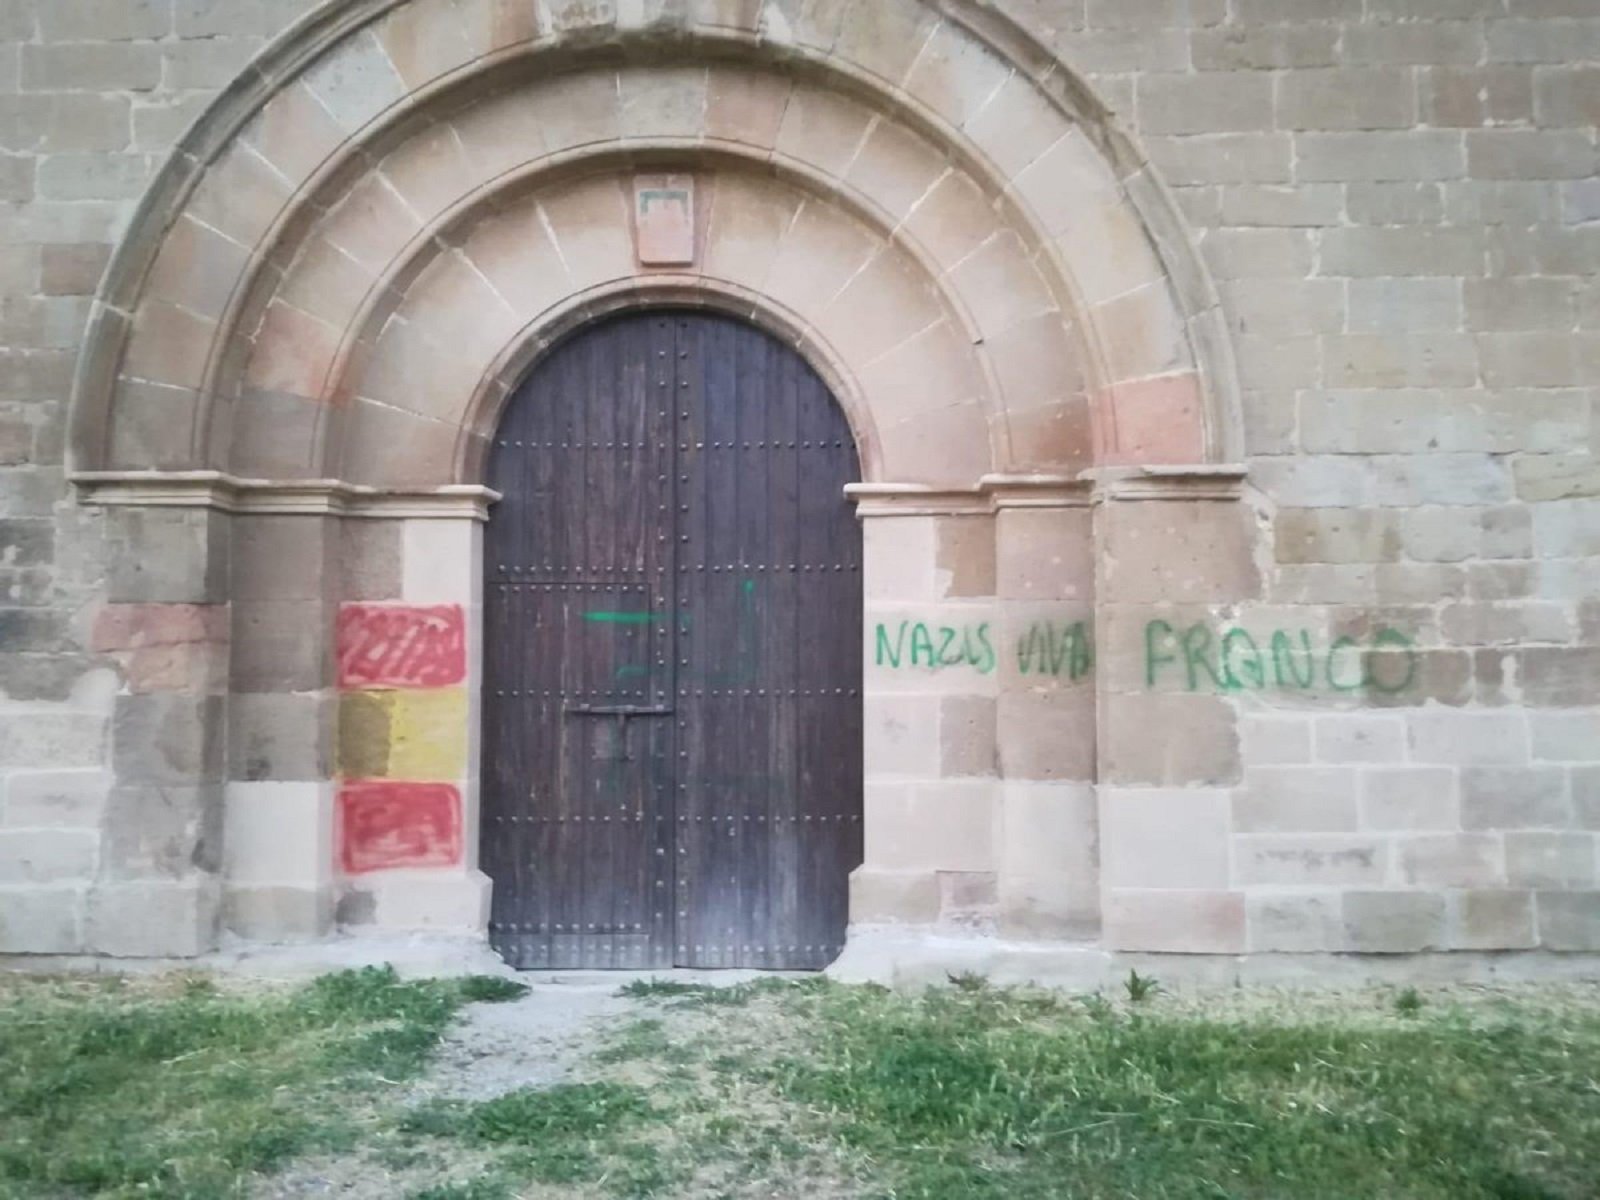 Medieval monastery sprayed with Spanish nationalist graffiti on eve of festival